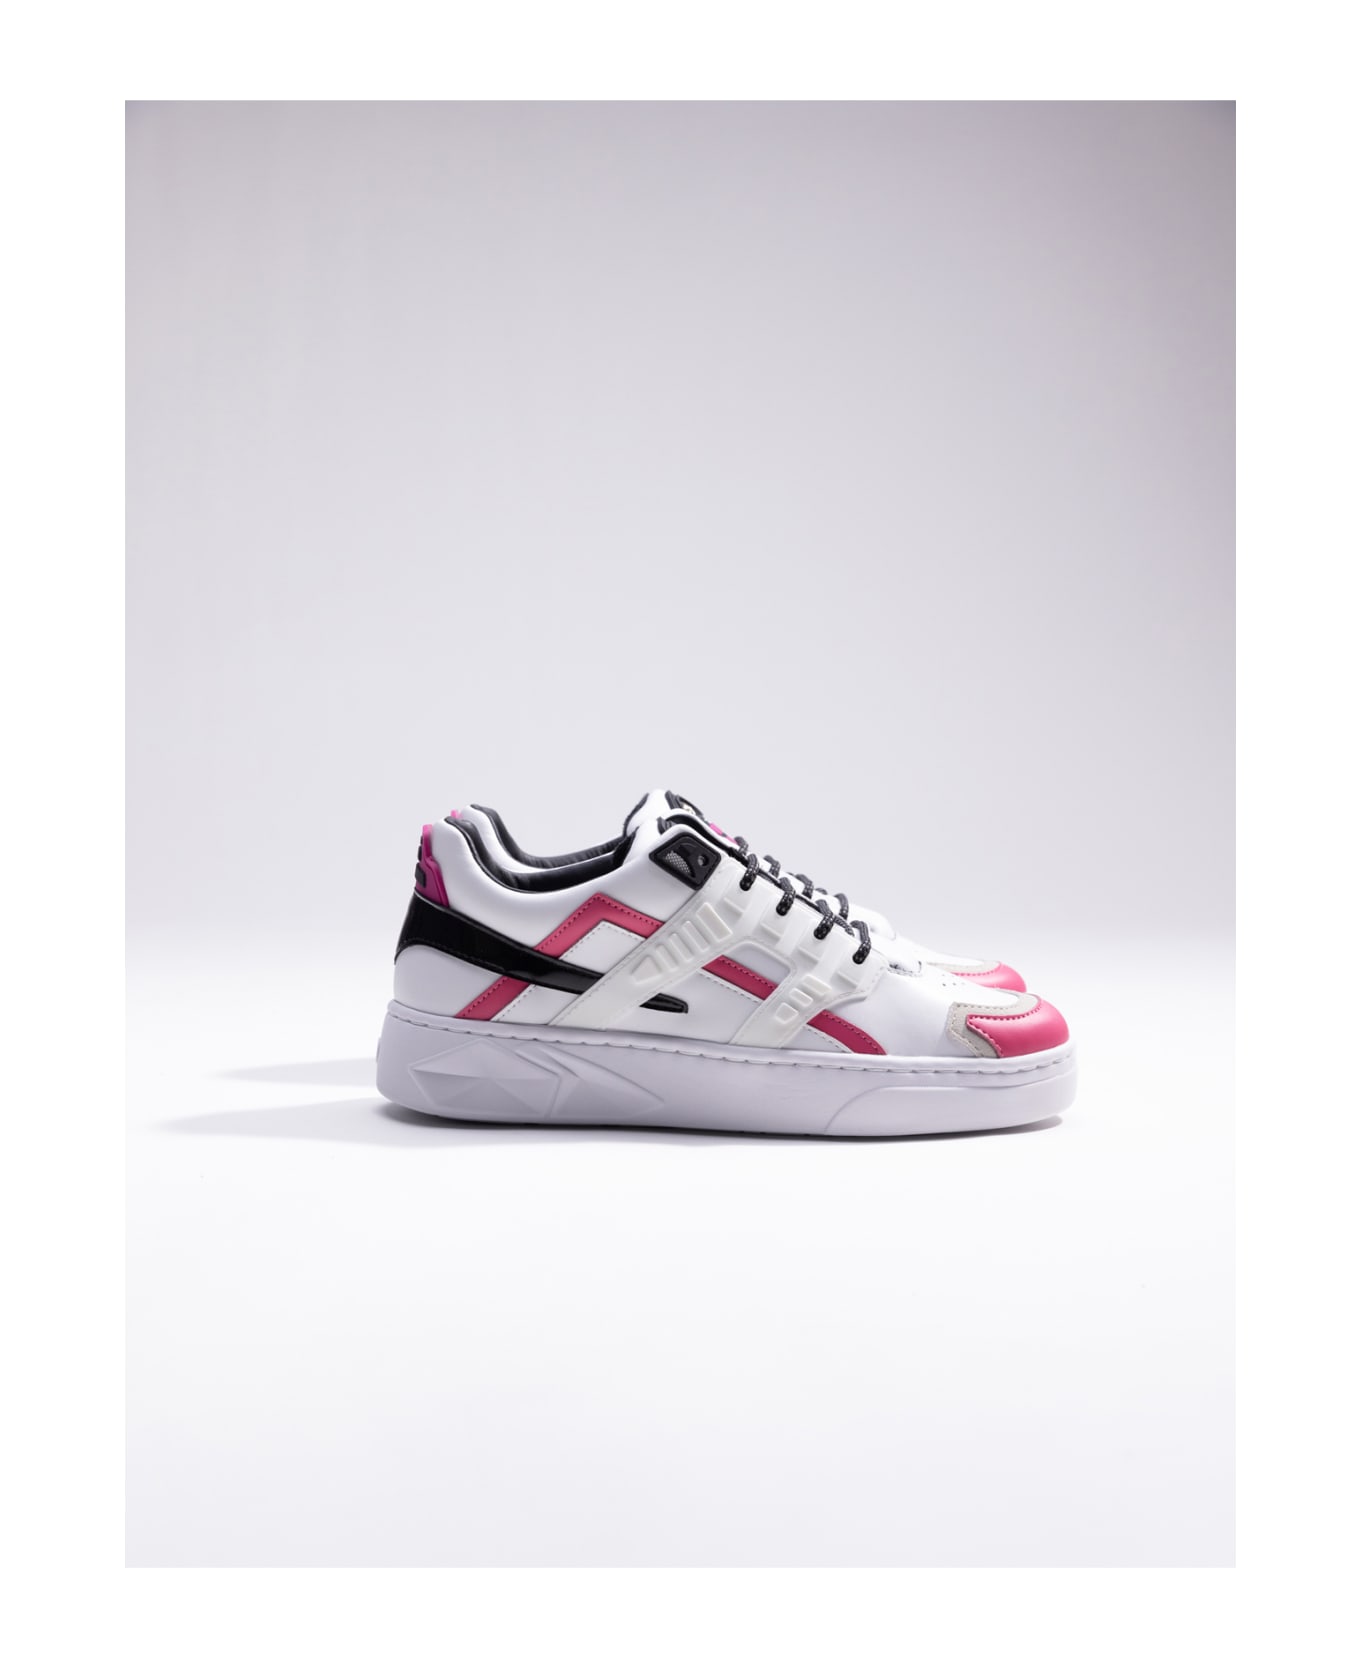 Hide&Jack Low Top Sneaker - Mini Silverstone Pink White スニーカー